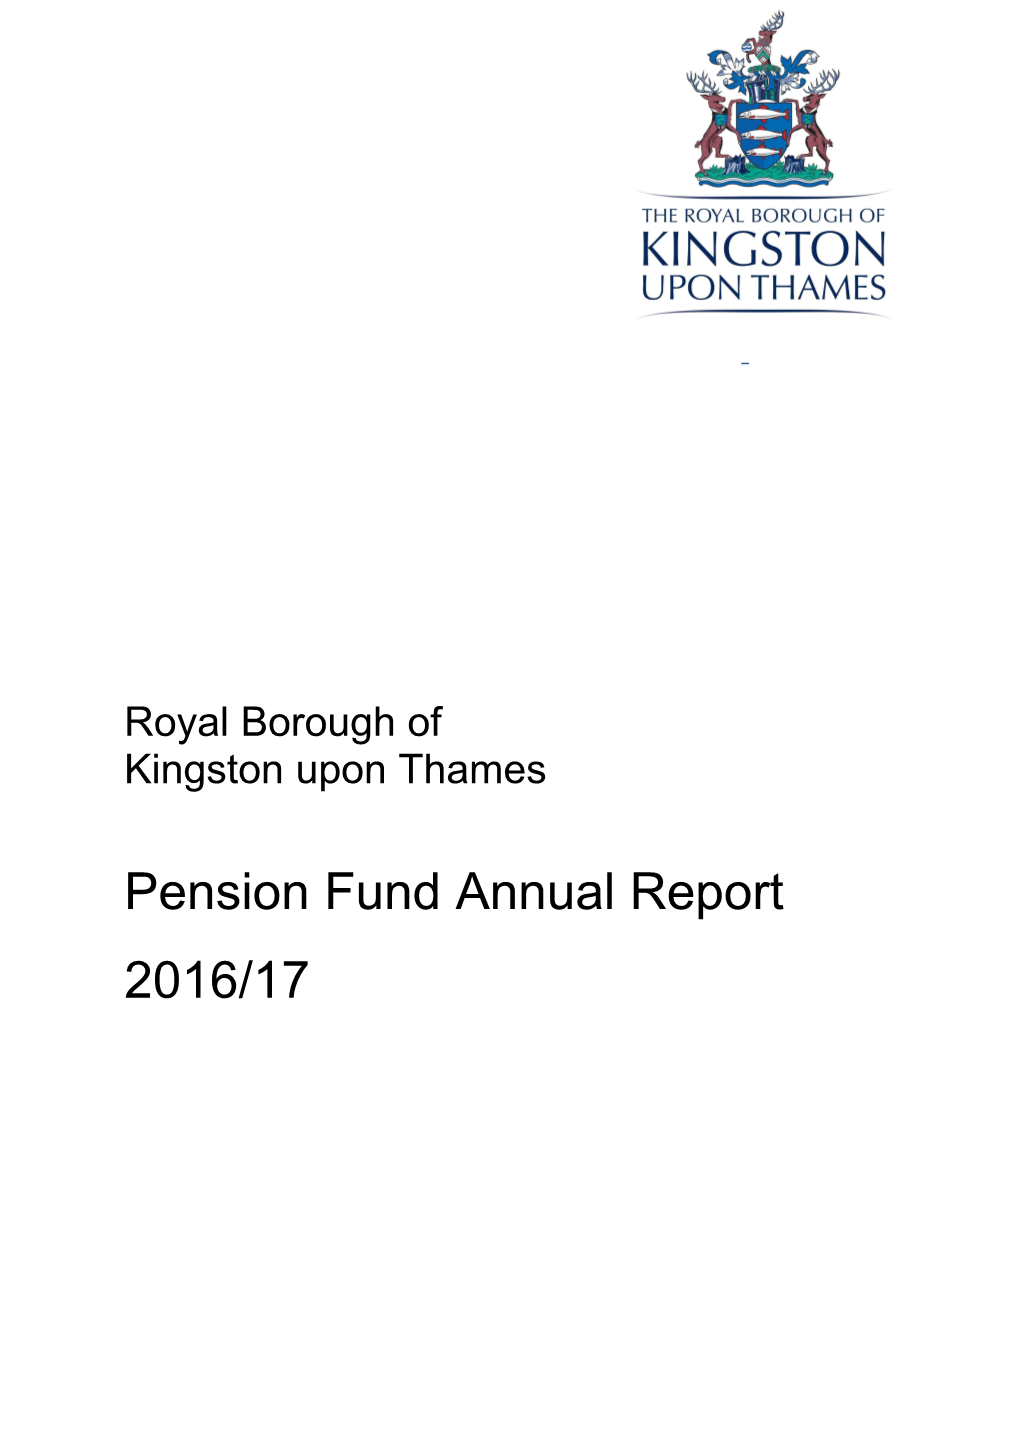 Royal Borough of Kingston Upon Thames Pension Fund